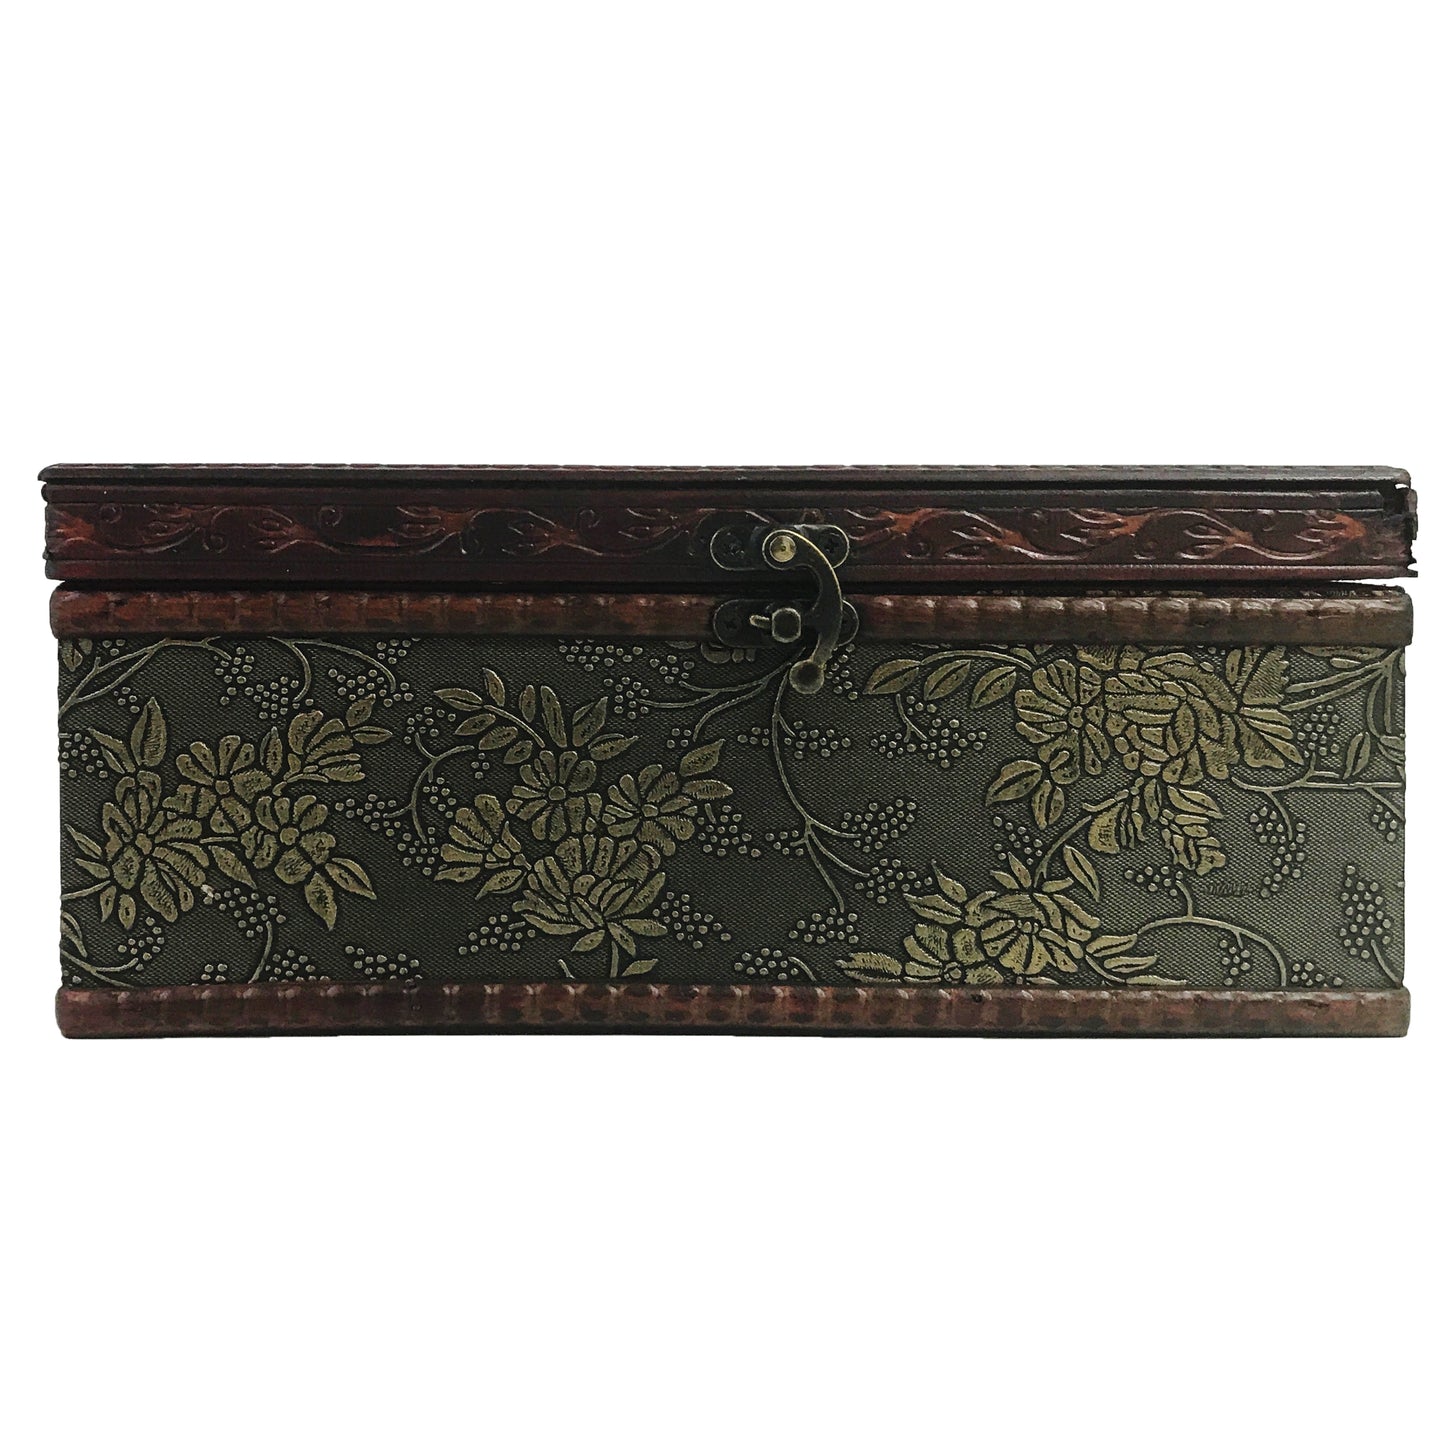 Allgala Wooden Box Antique Wooden Tissue Box Holder, Flat Top Style